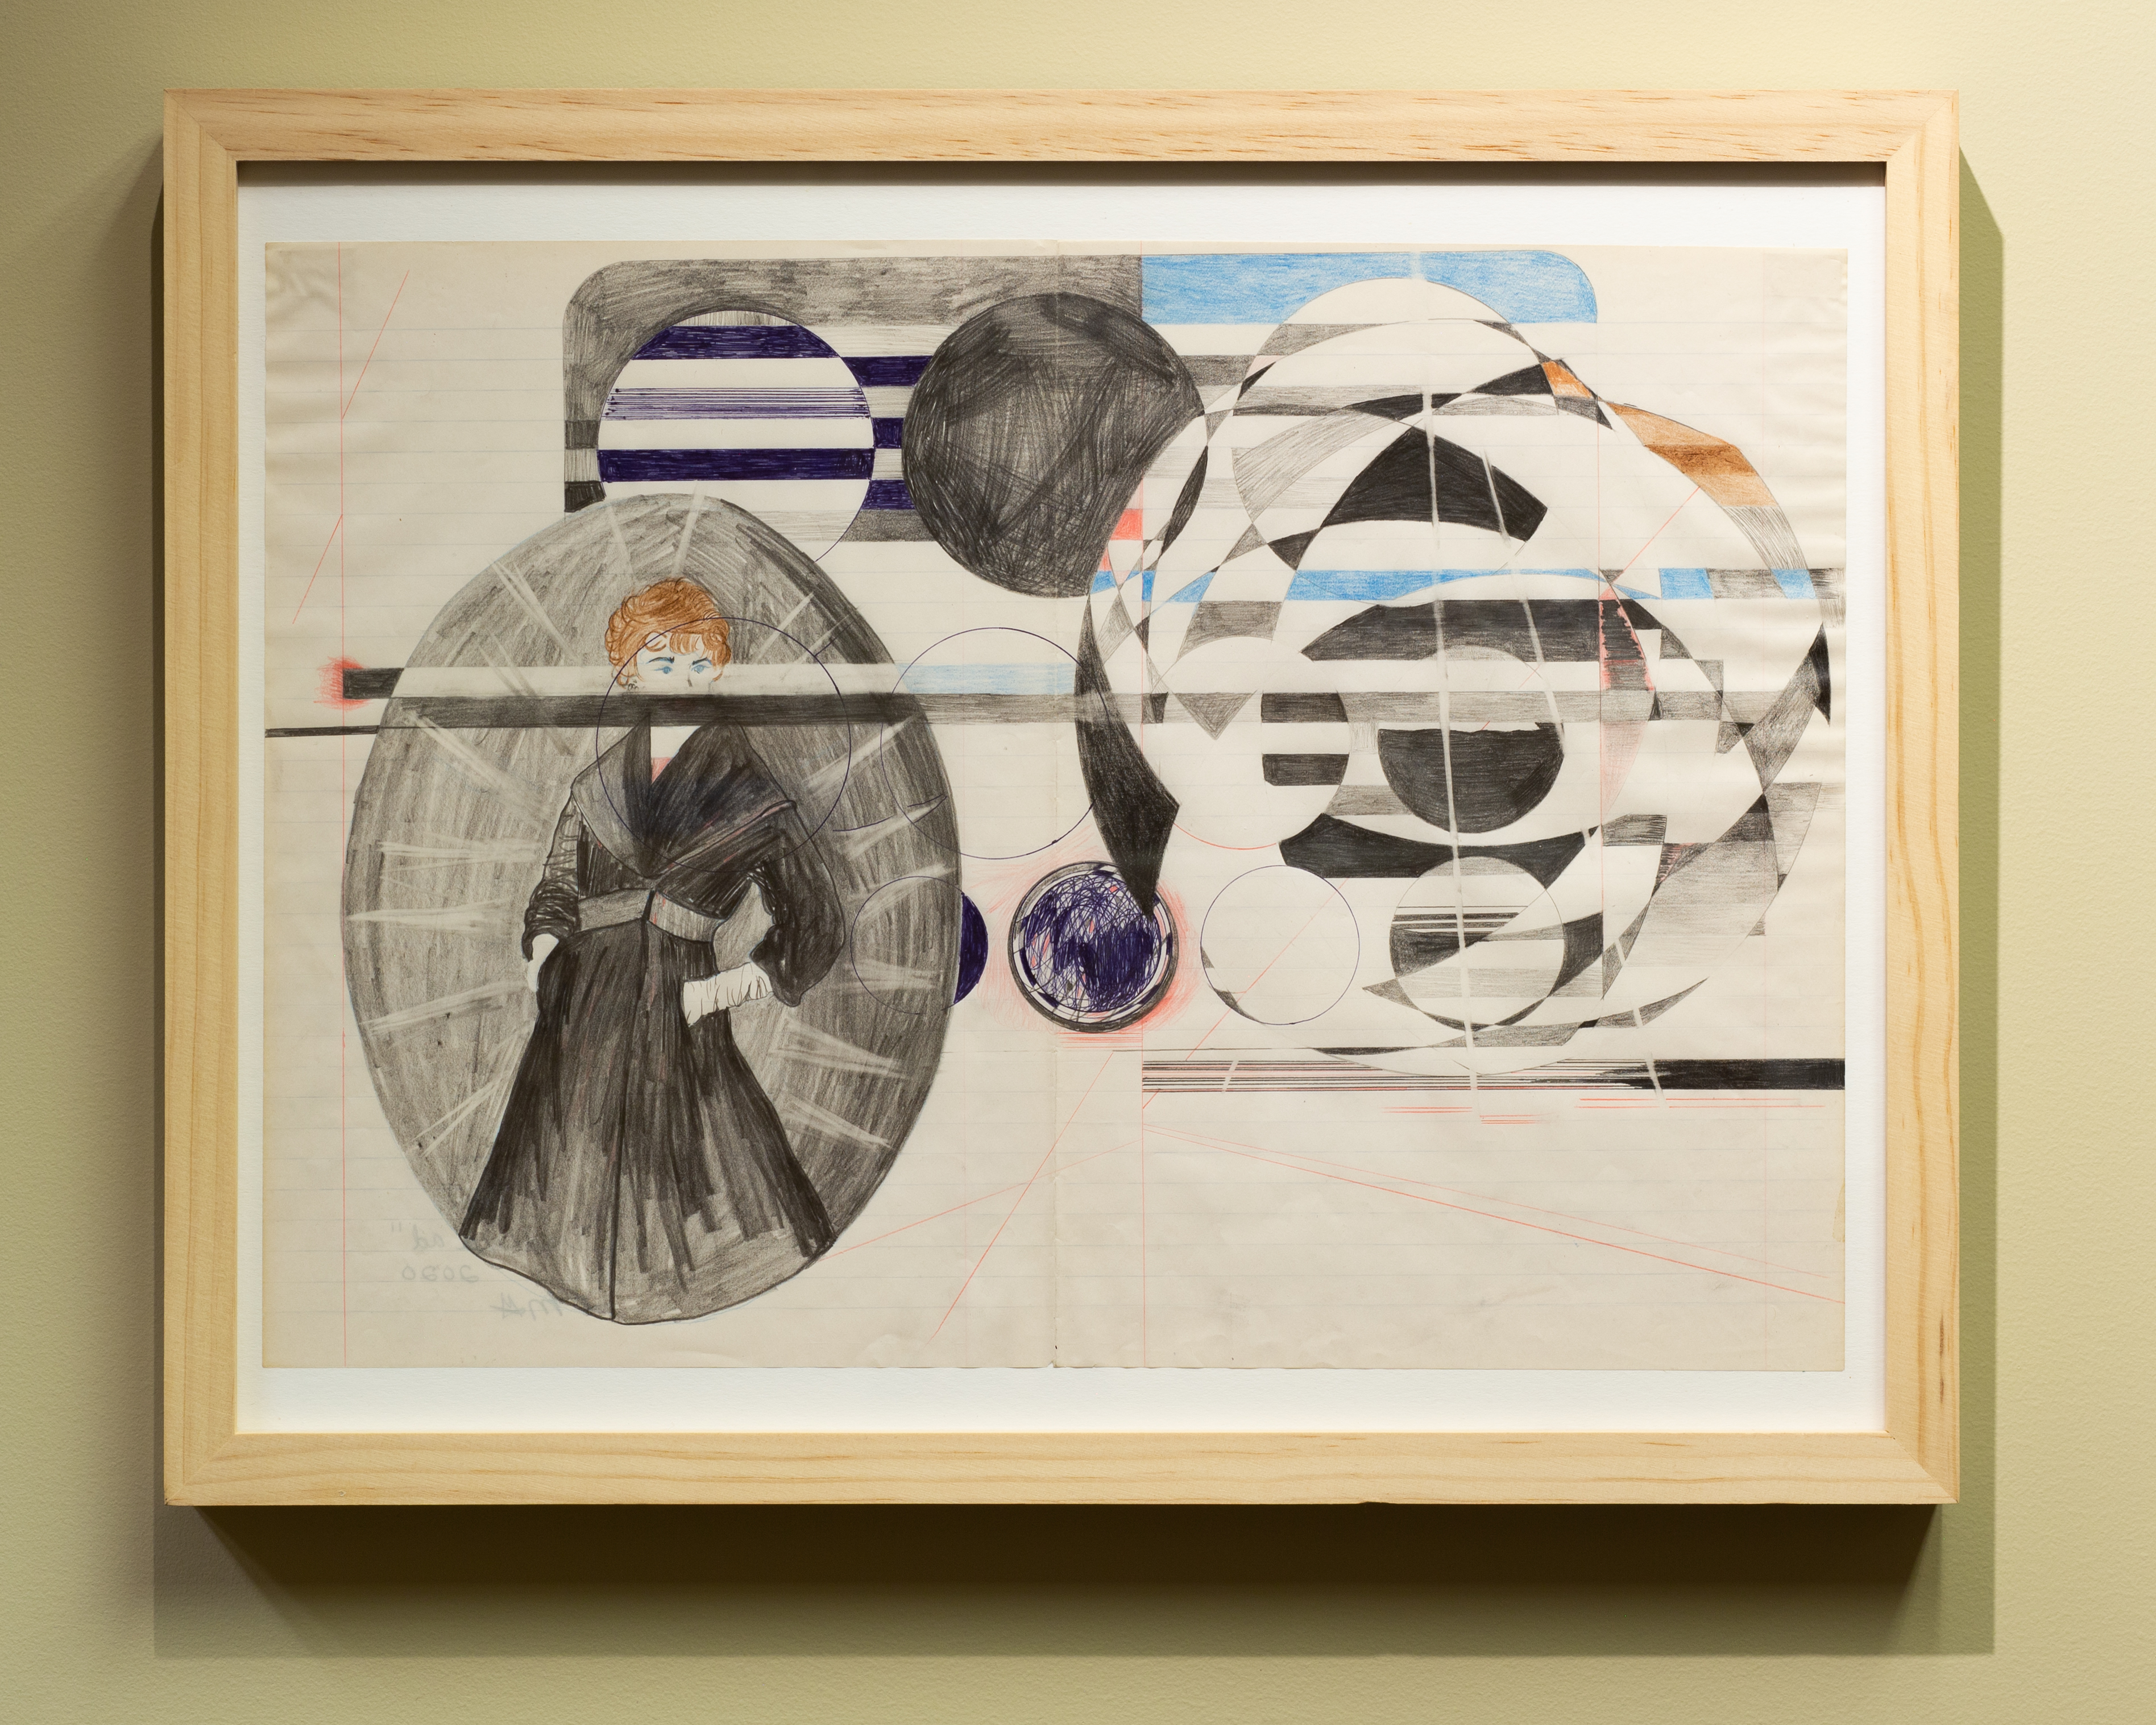 Lynne Ghenov, Fredrica, 11" x 17", graphite, pen, colored pencil on lined paper, 2020